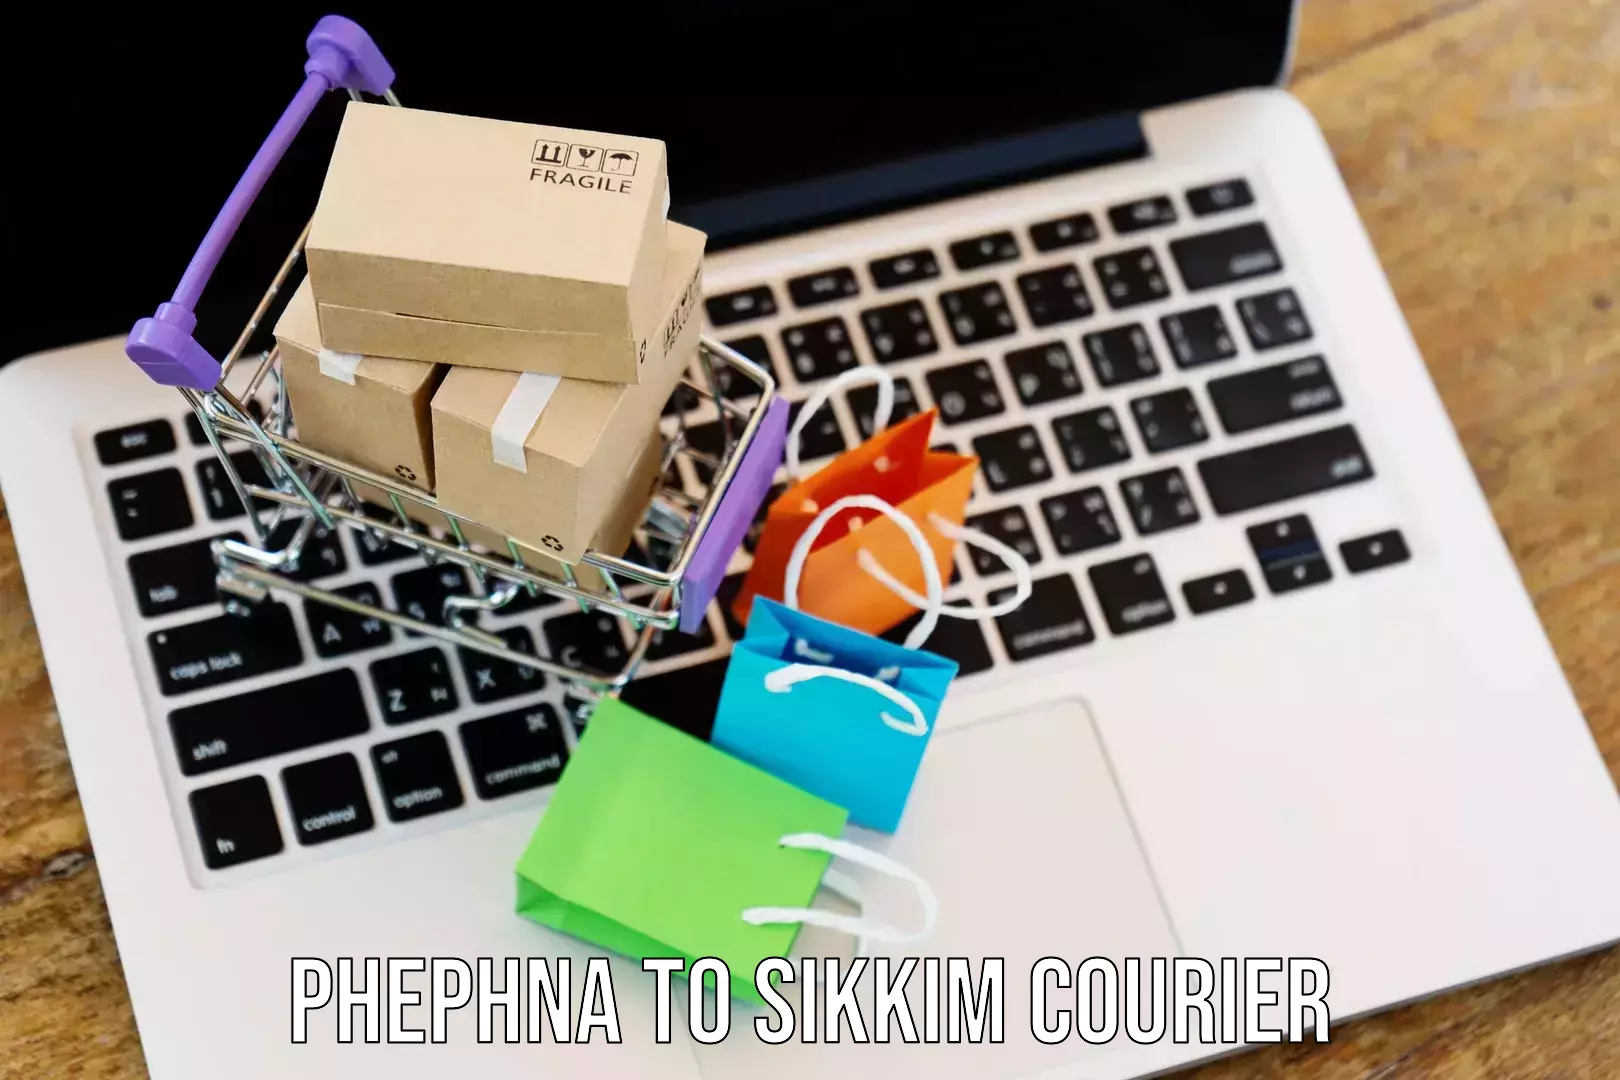 Tech-enabled shipping Phephna to Rangpo